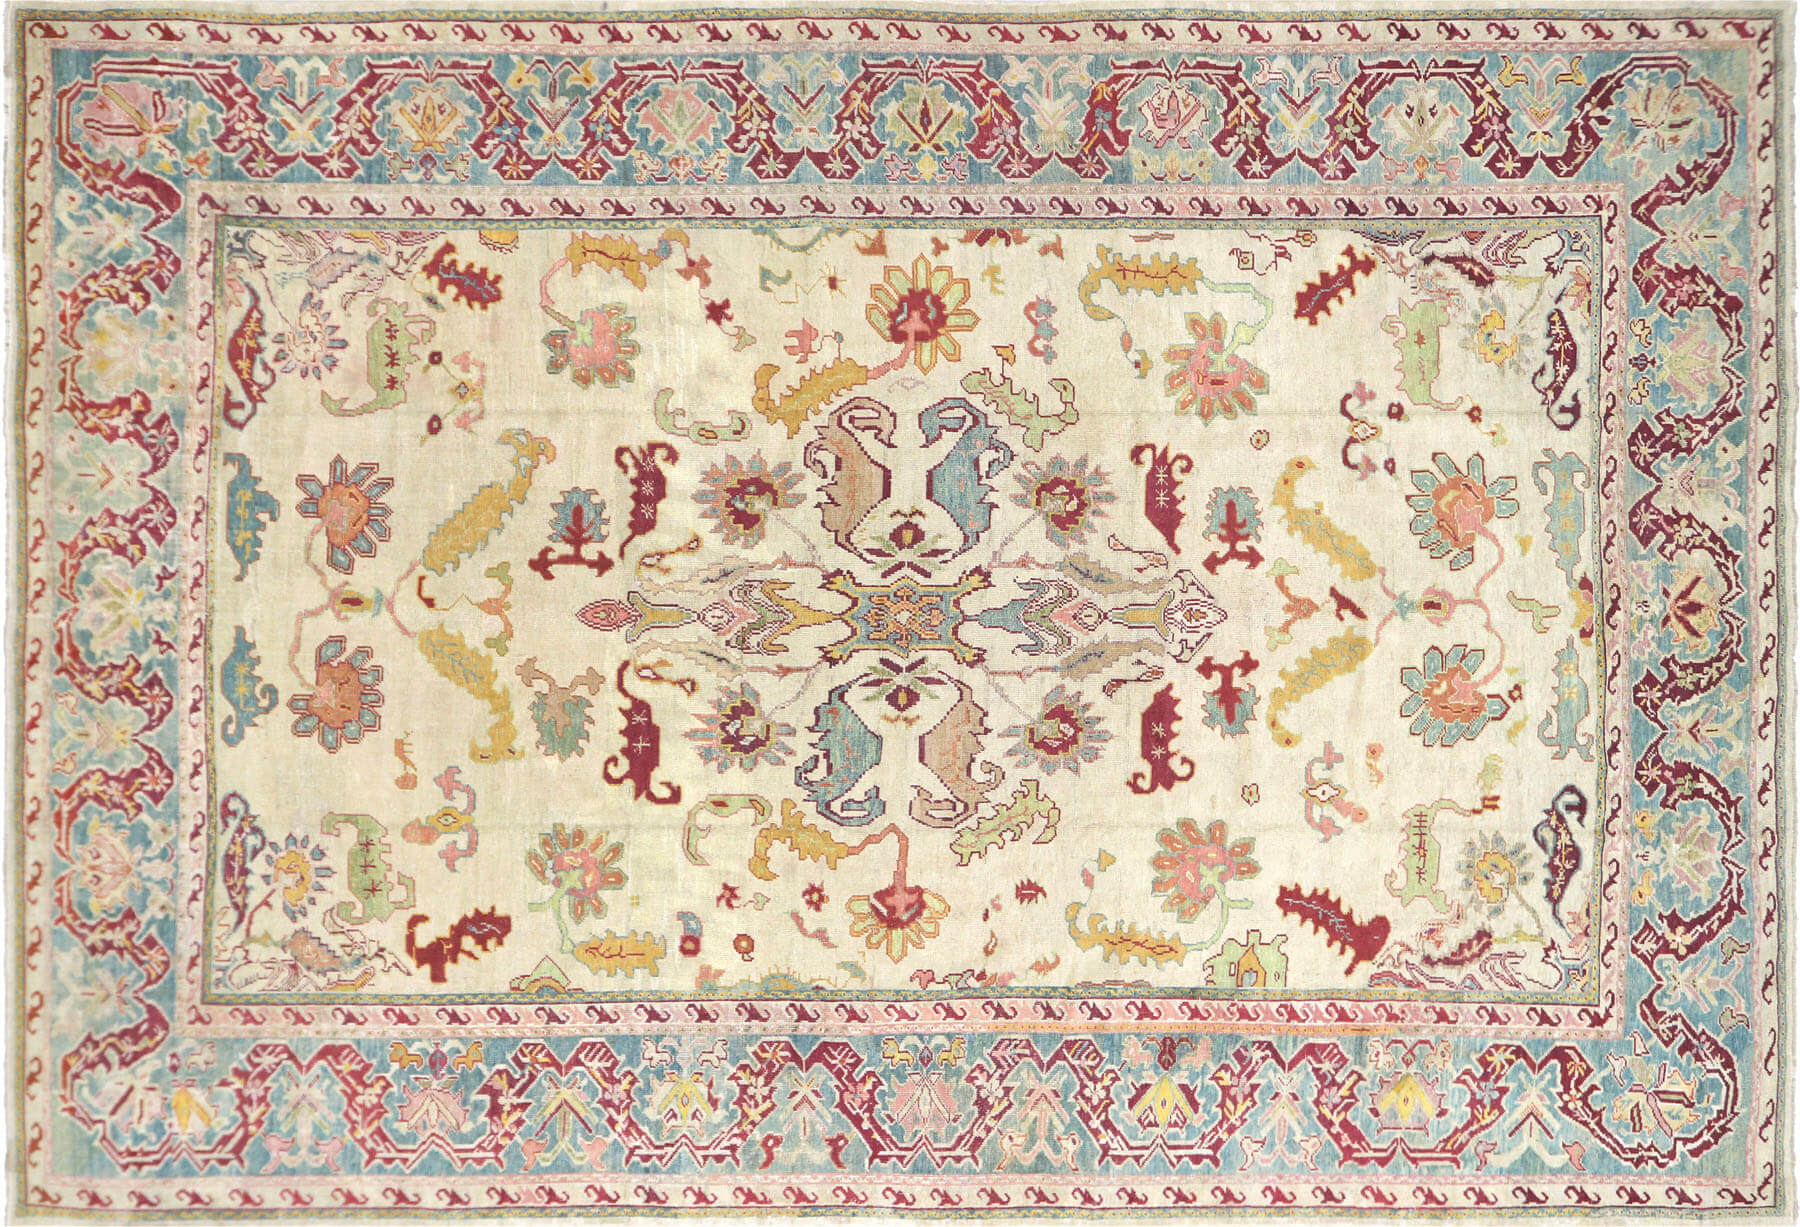 Antique Turkish Oushak Carpet - 10'10" x 15'6"